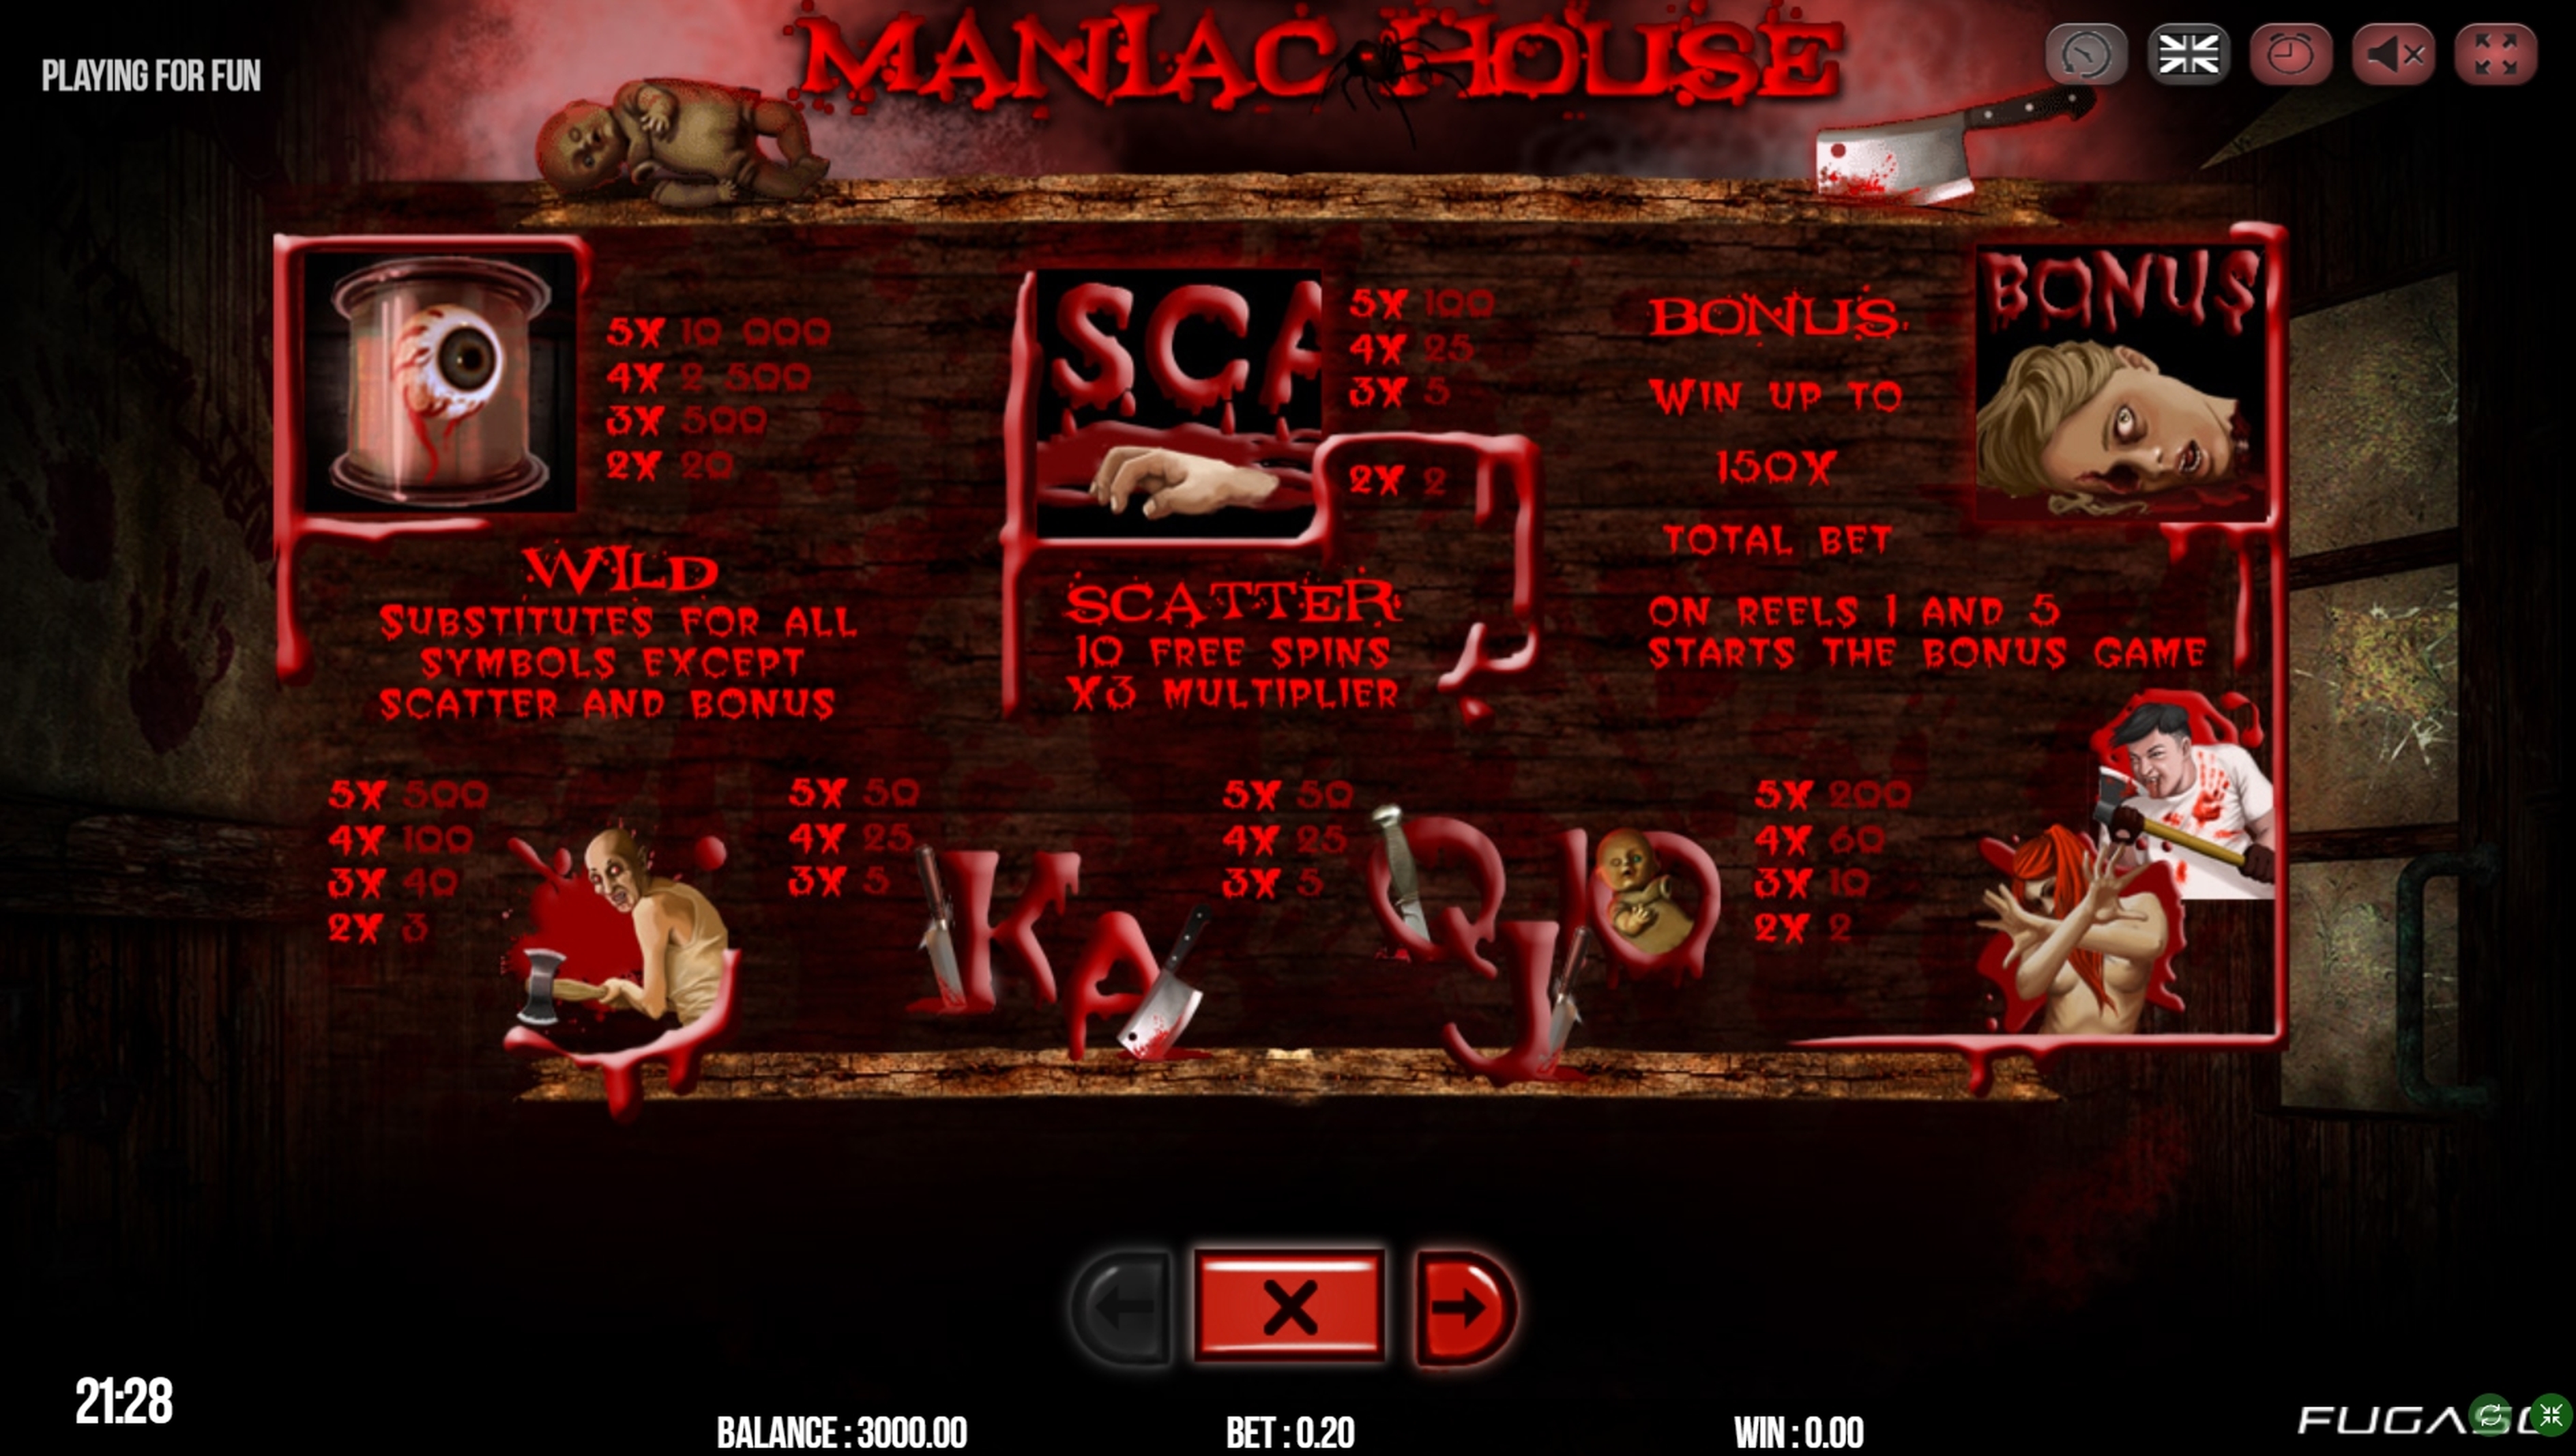 Info of Maniac House Slot Game by Fugaso